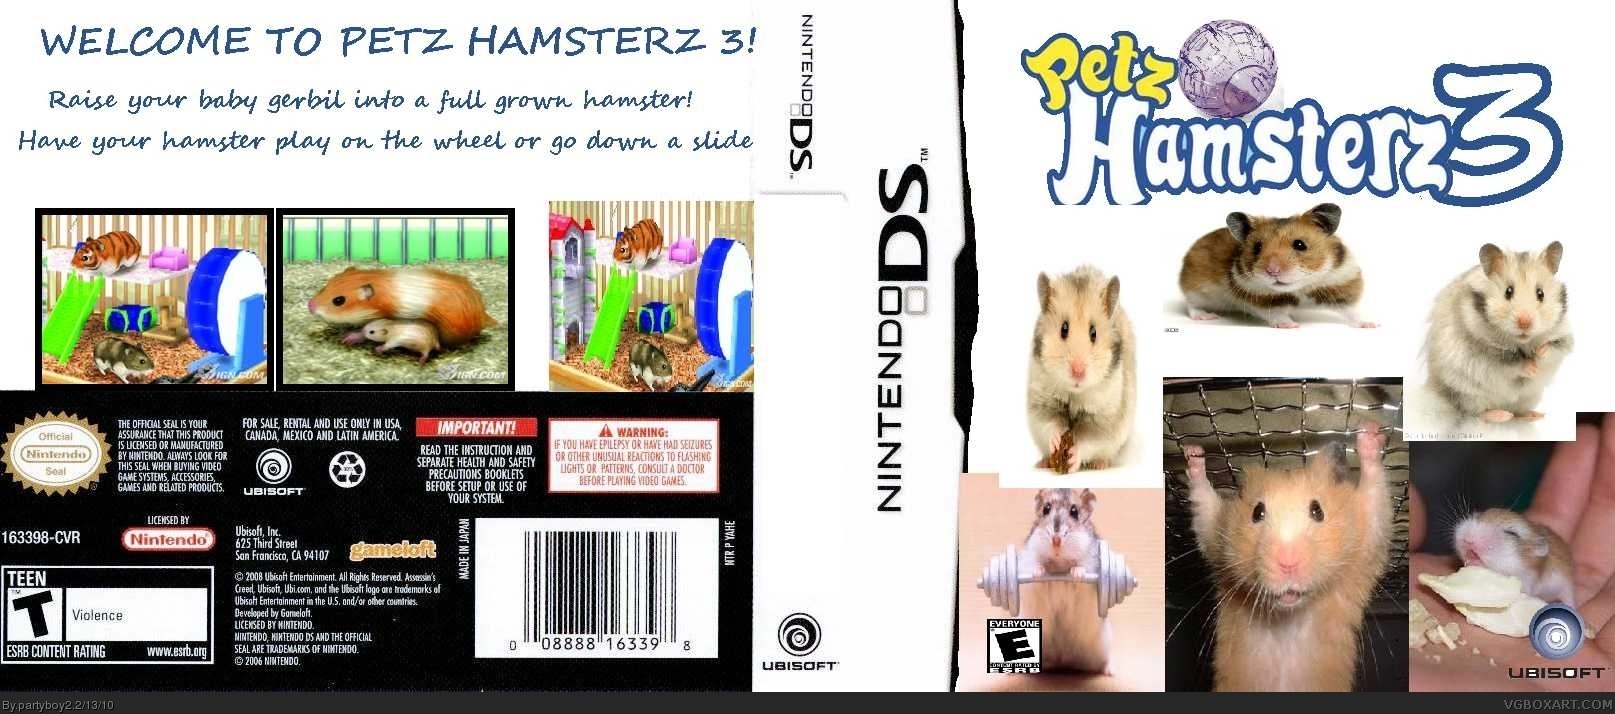 Petz Hamsterz box cover